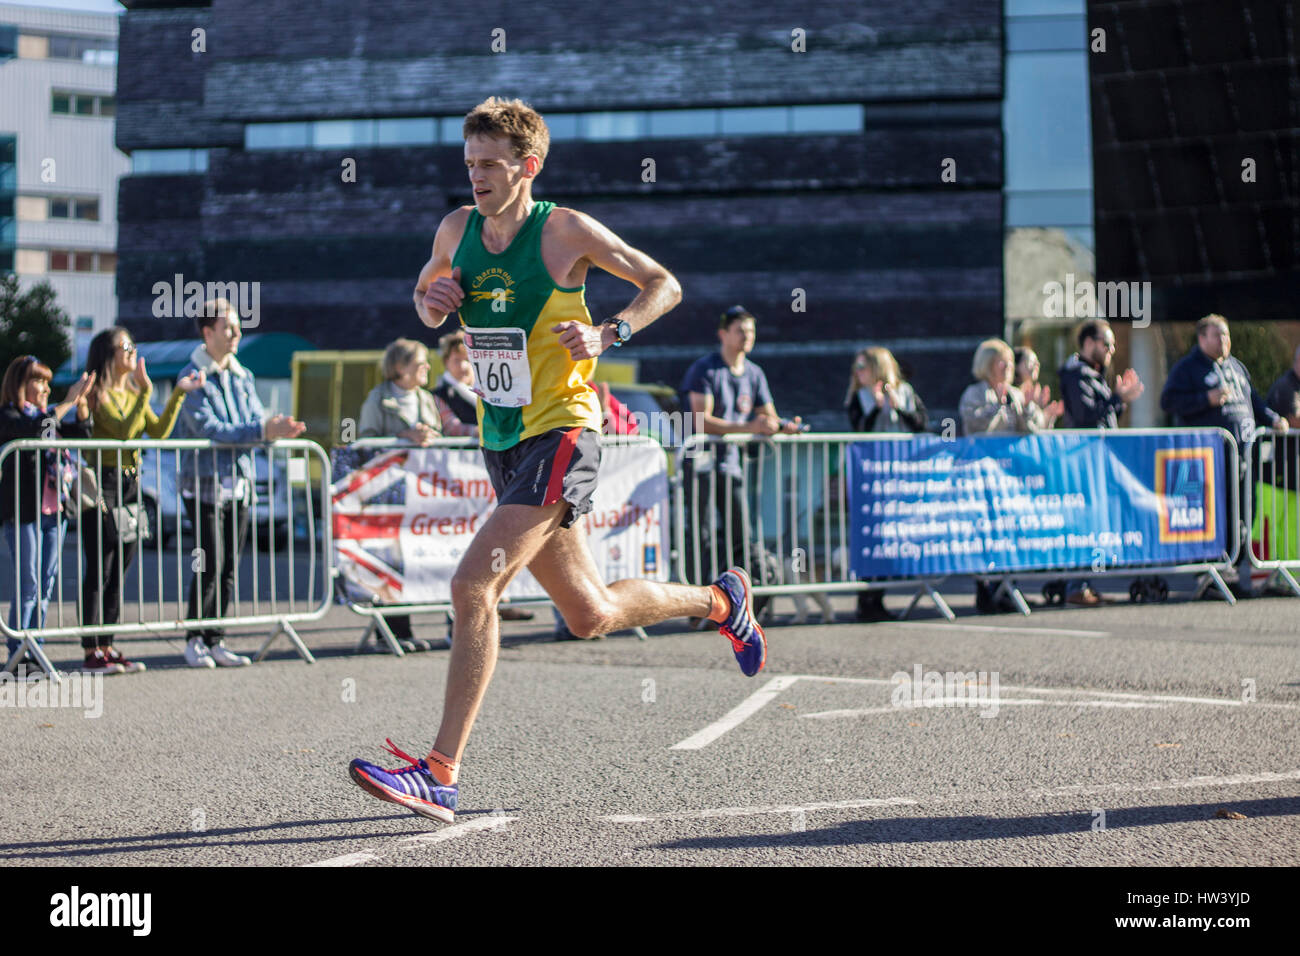 CARDIFF, UNITED KINGDOM. Cardiff Half Marathon 2016 had a record breaking 22,000 runners this year. Stock Photo